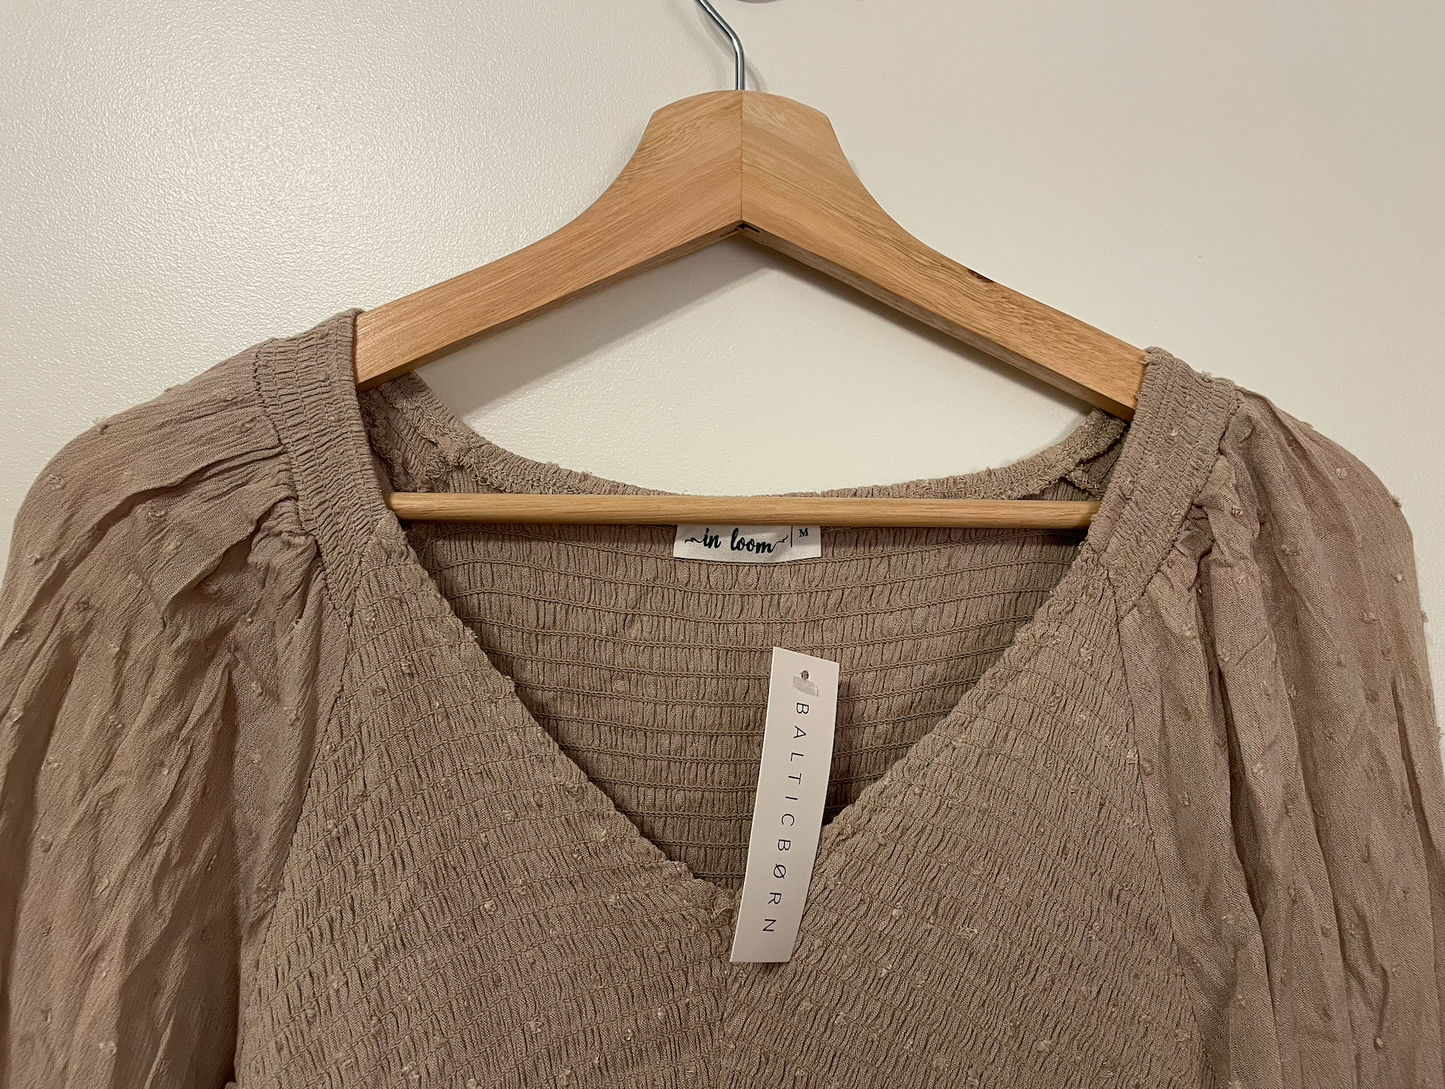 New with tags - Baltic Born beige dress - women's size medium